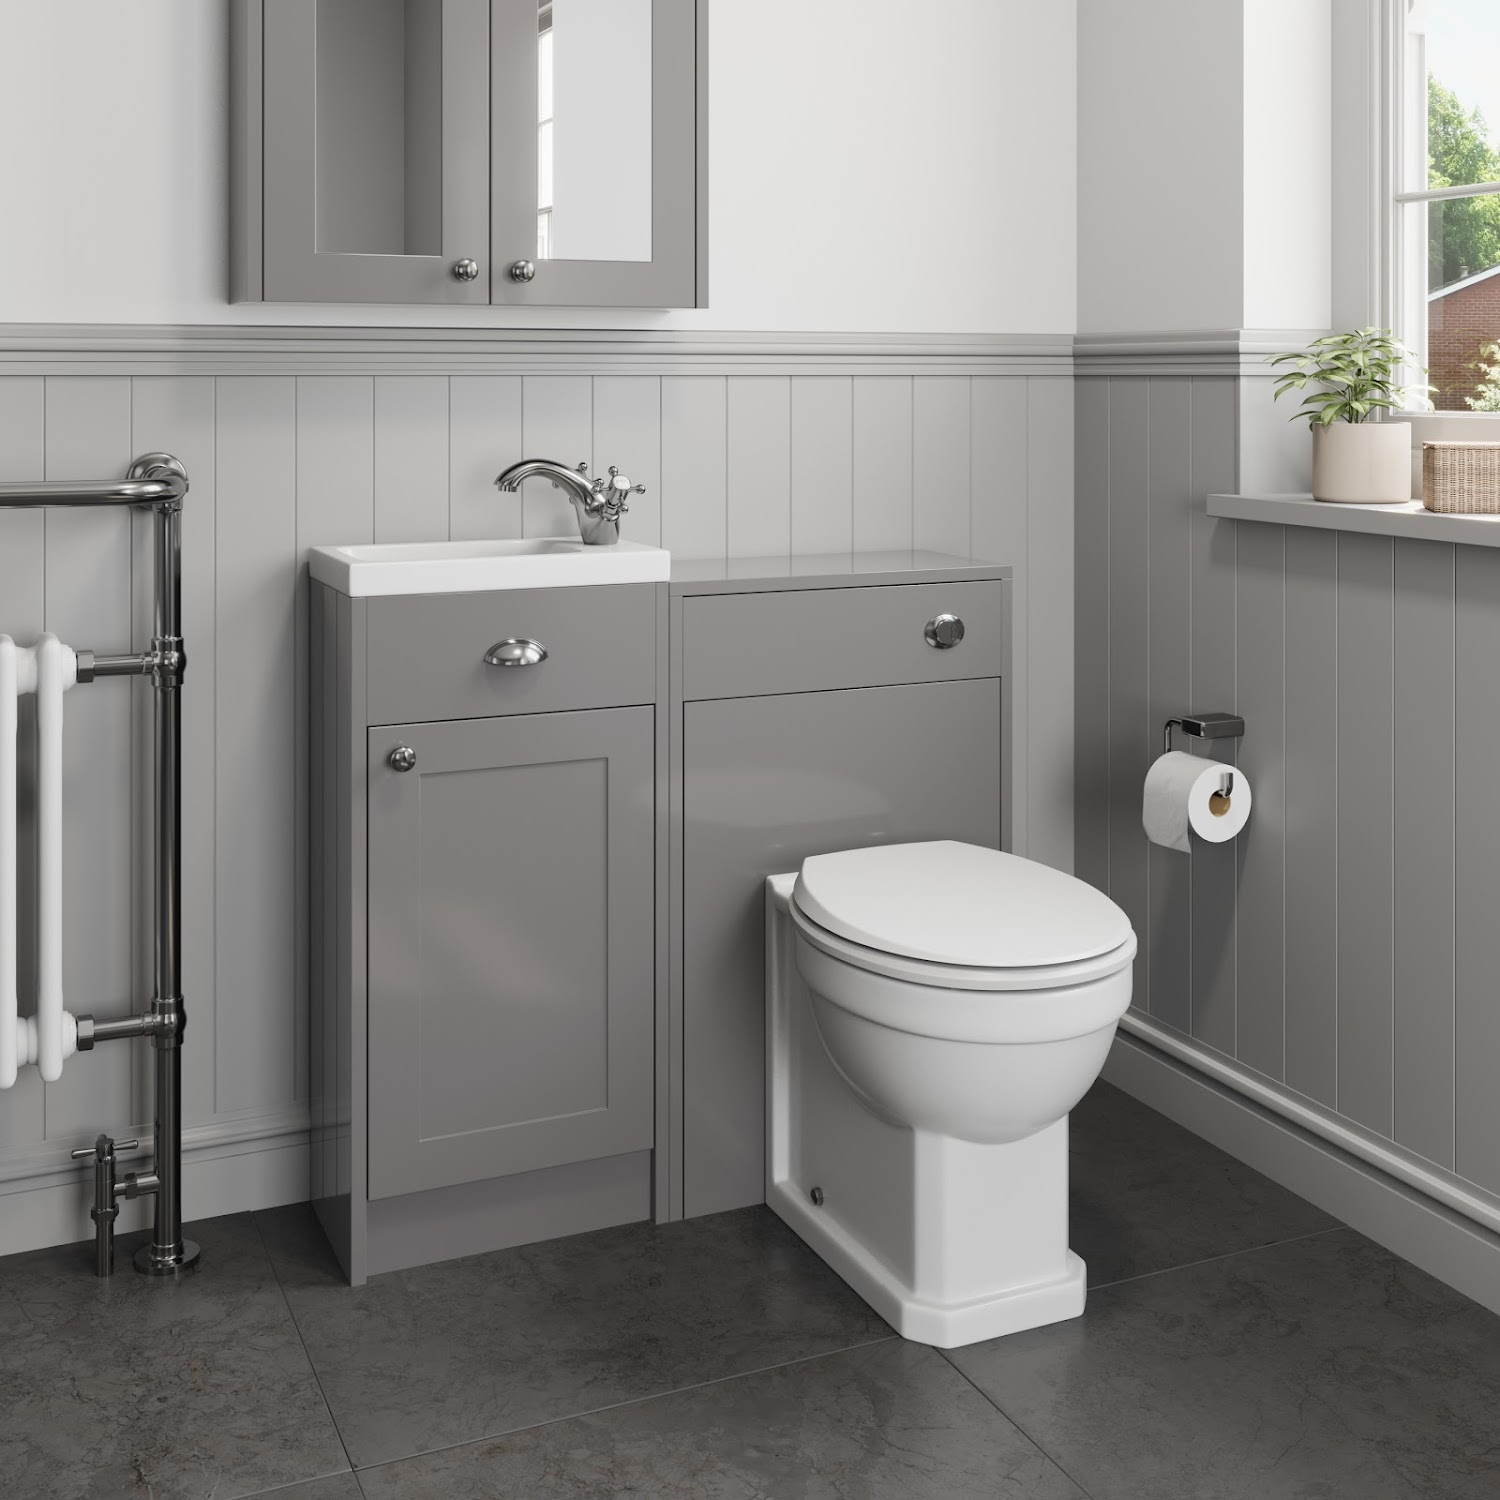 950mm Traditional Toilet Bathroom Vanity Unit Combined Basin Sink Furniture Grey Ebay